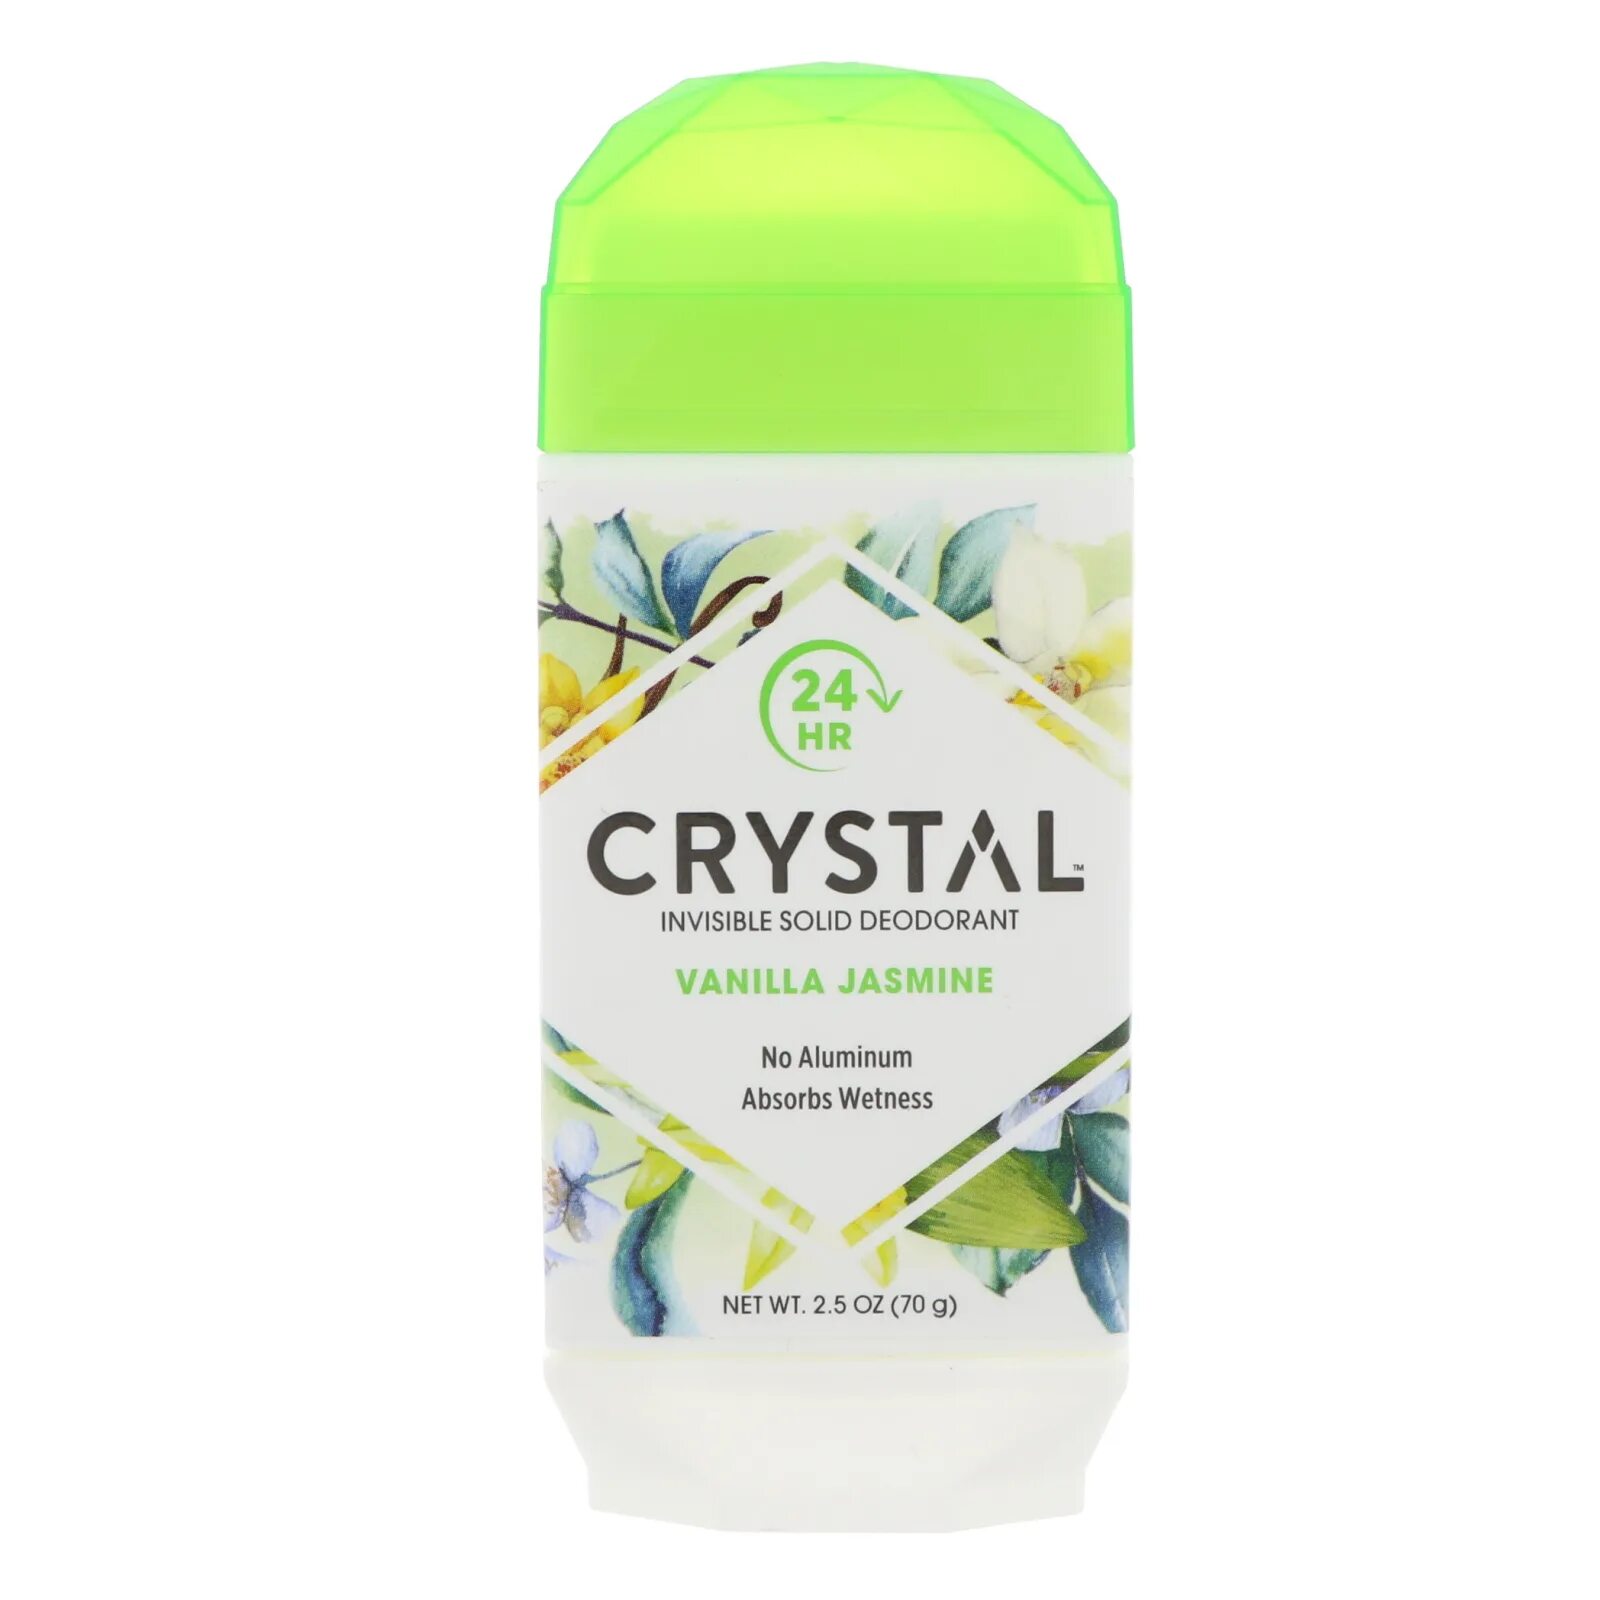 Дезодорант crystal. Дезодорант Crystal body Deodorant. Дезодорант Crystal Mineral-enriched. Кристал дезодорант Кристалл. Secret Jasmine дезодорант.